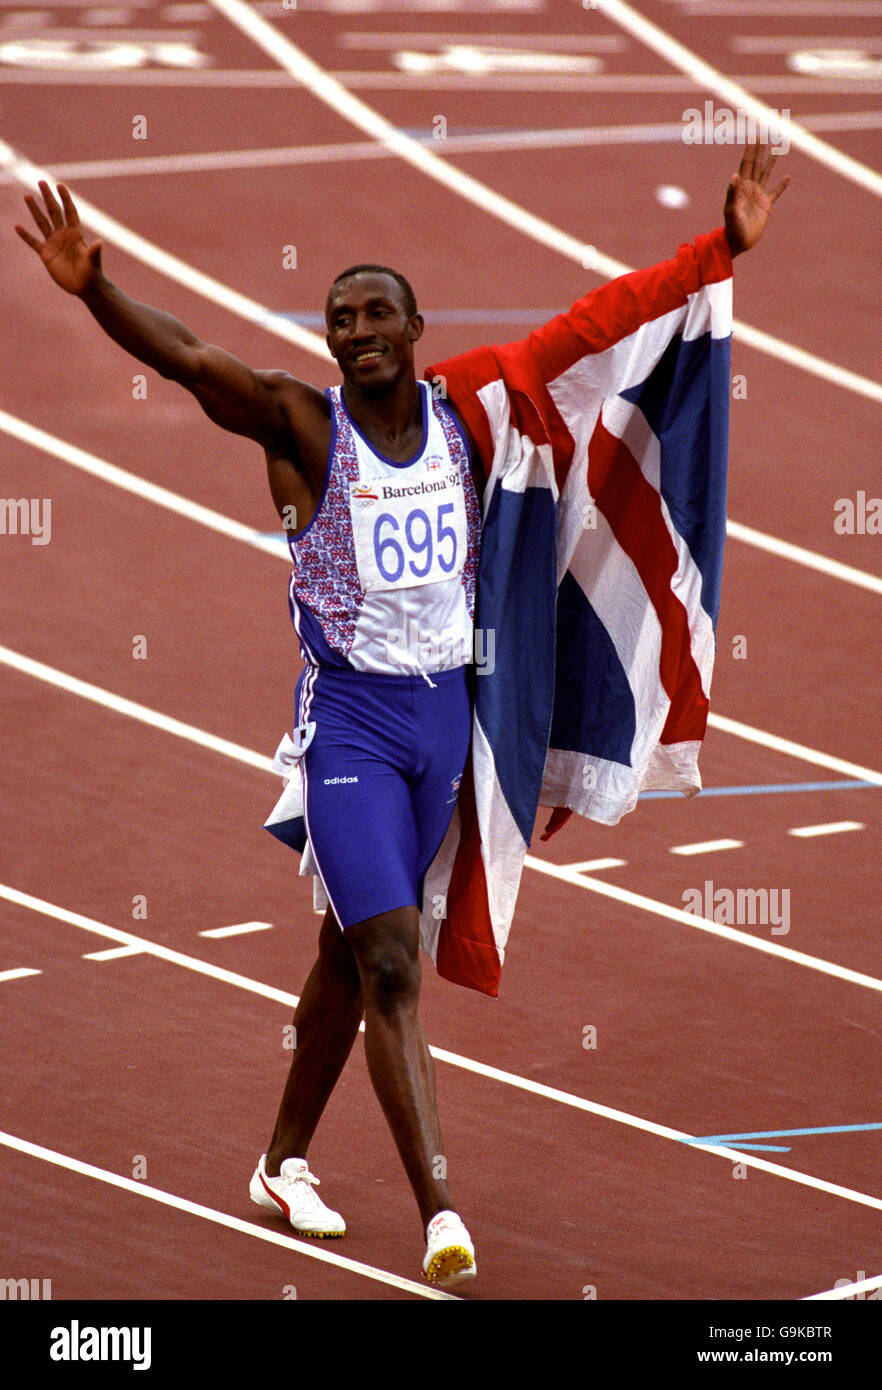 Athletics - Barcelona Olympic Games - Mens 100m Final Stock Photo